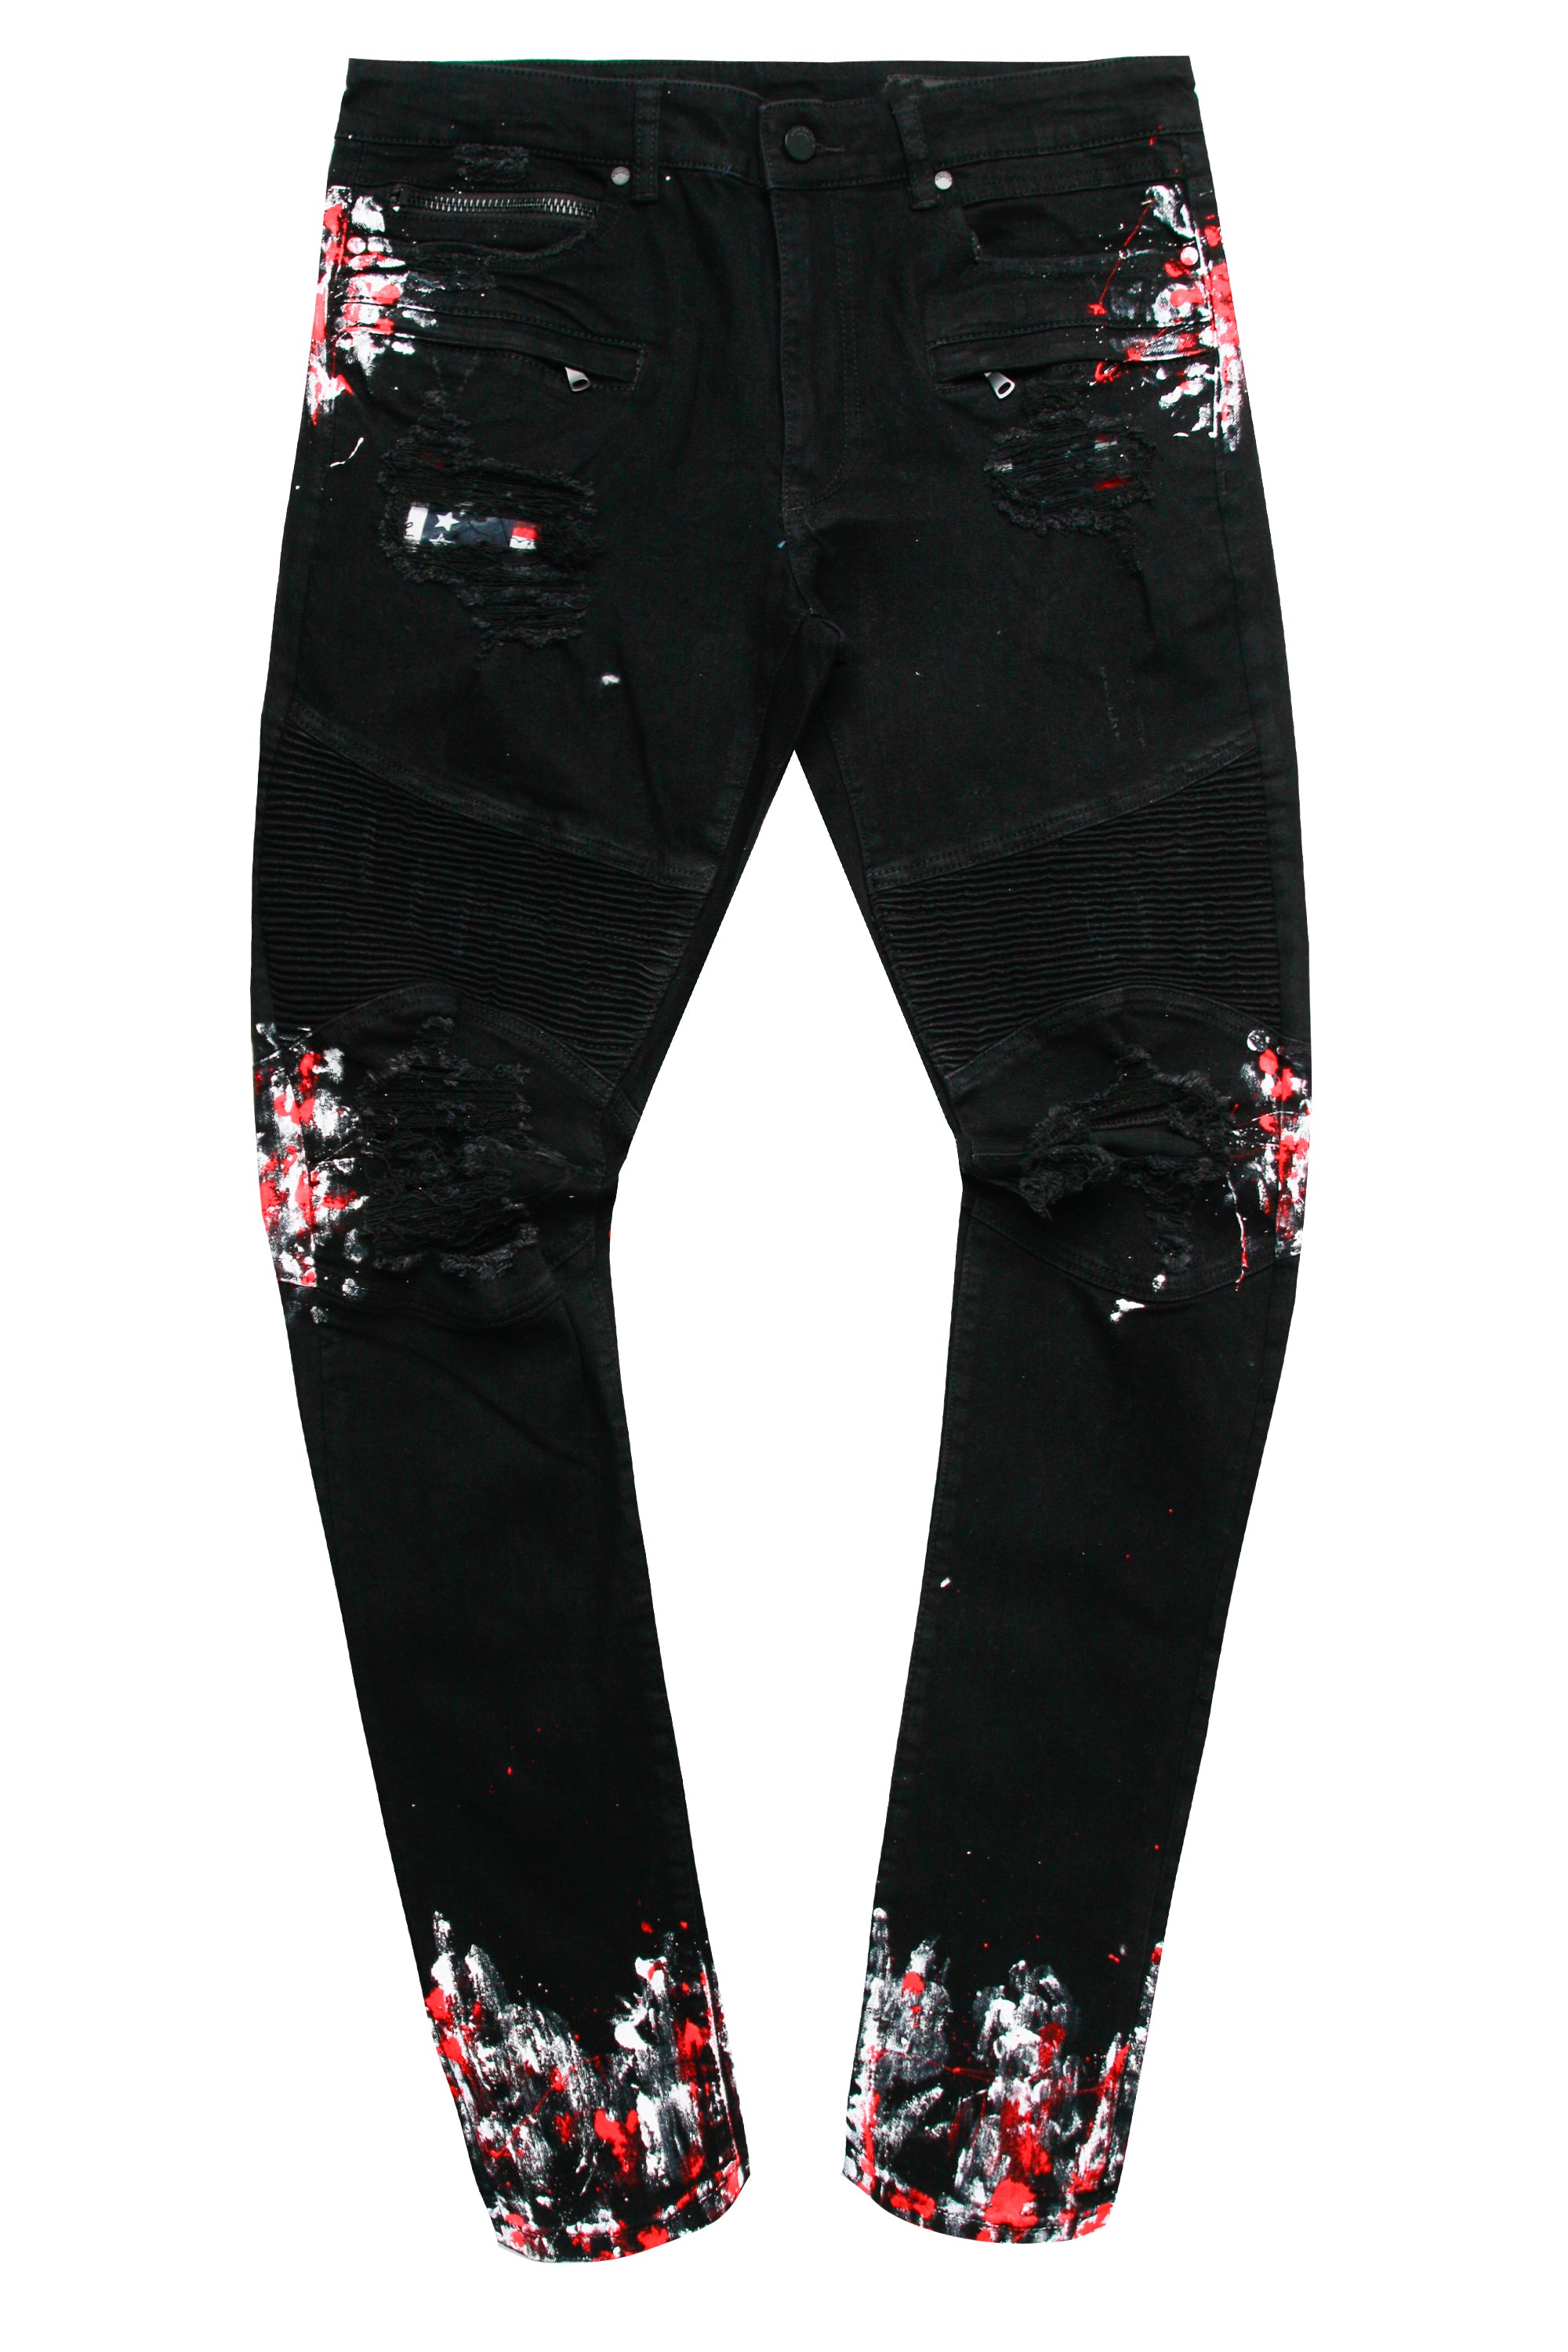 rockstaroriginal #jeans #review #fyp #june #lookinggood #lovin #foryo, Jeans